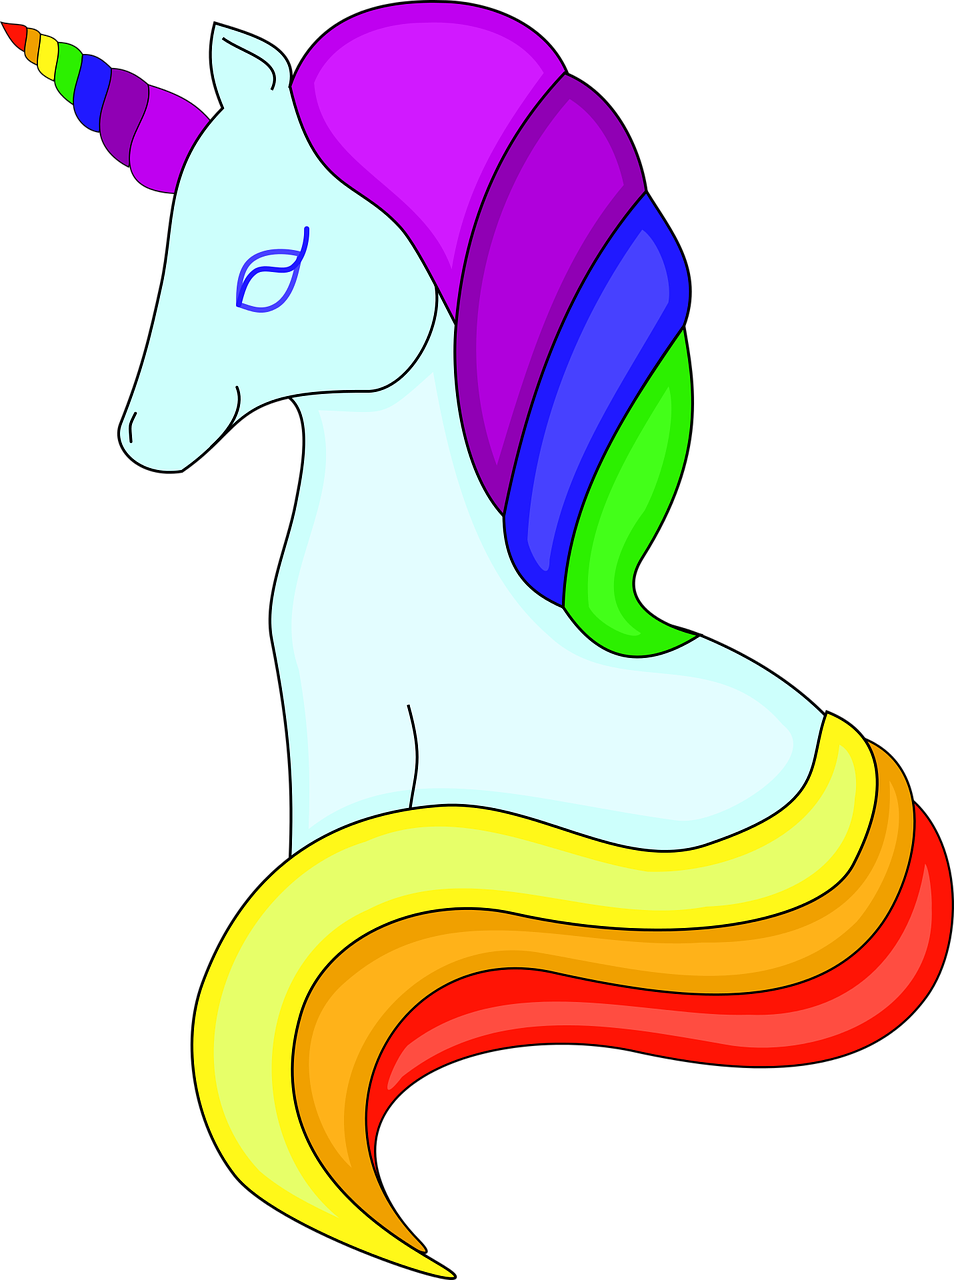 Download Free Photo Of Unicorn Rainbow Cute Pretty Colorful